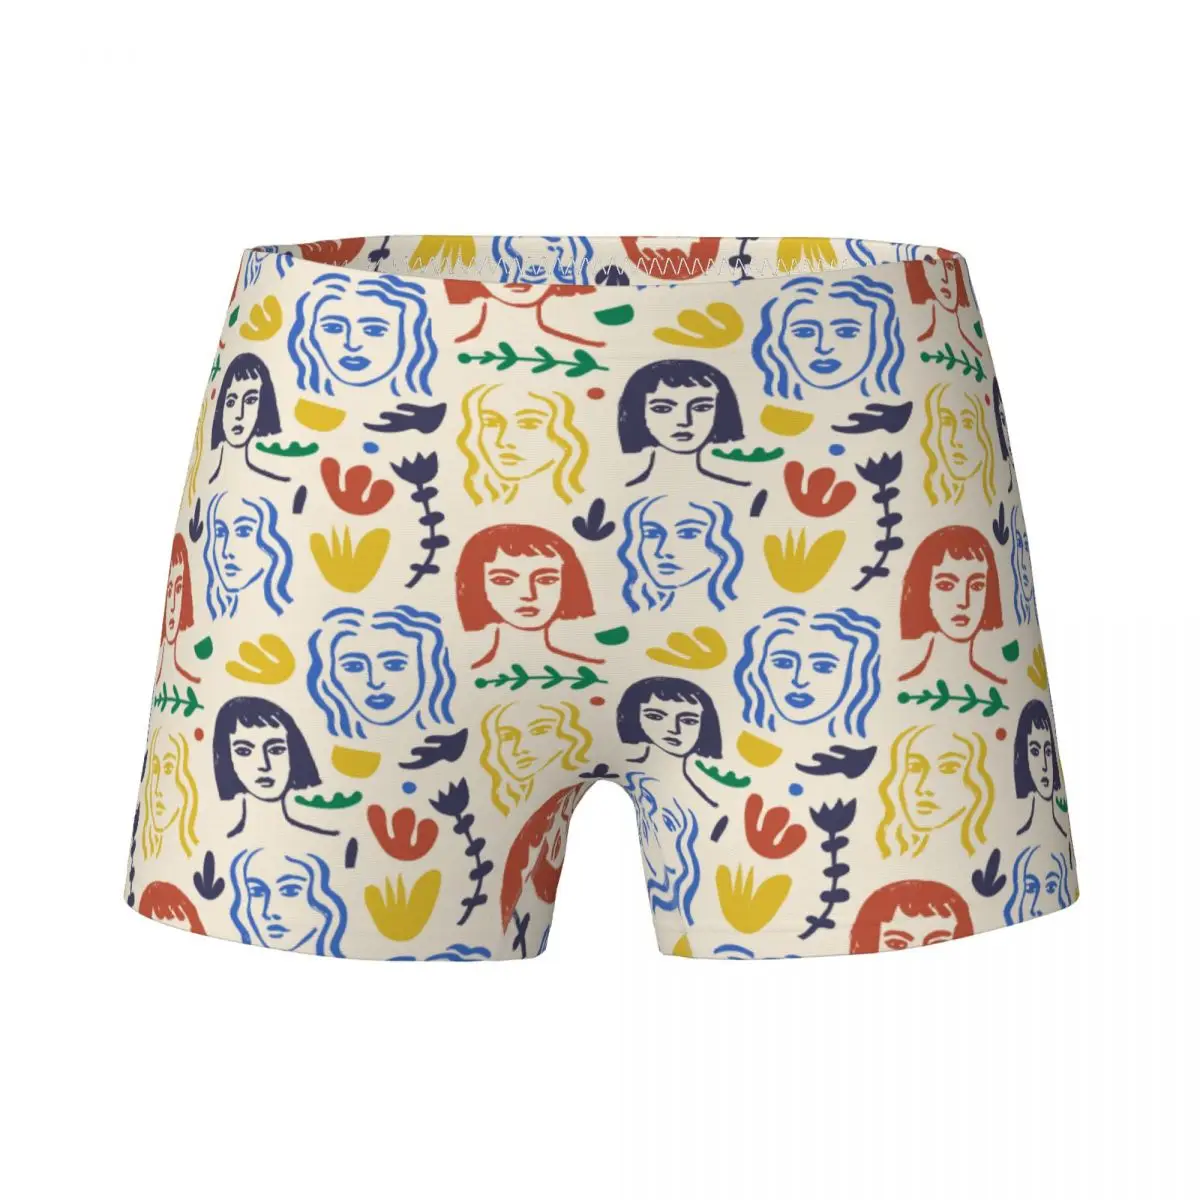 

Matisse Art Colorful Child Girls Underwear Kids Cute Boxers Shorts Cotton Teenage Panties Underpants 4-15Y